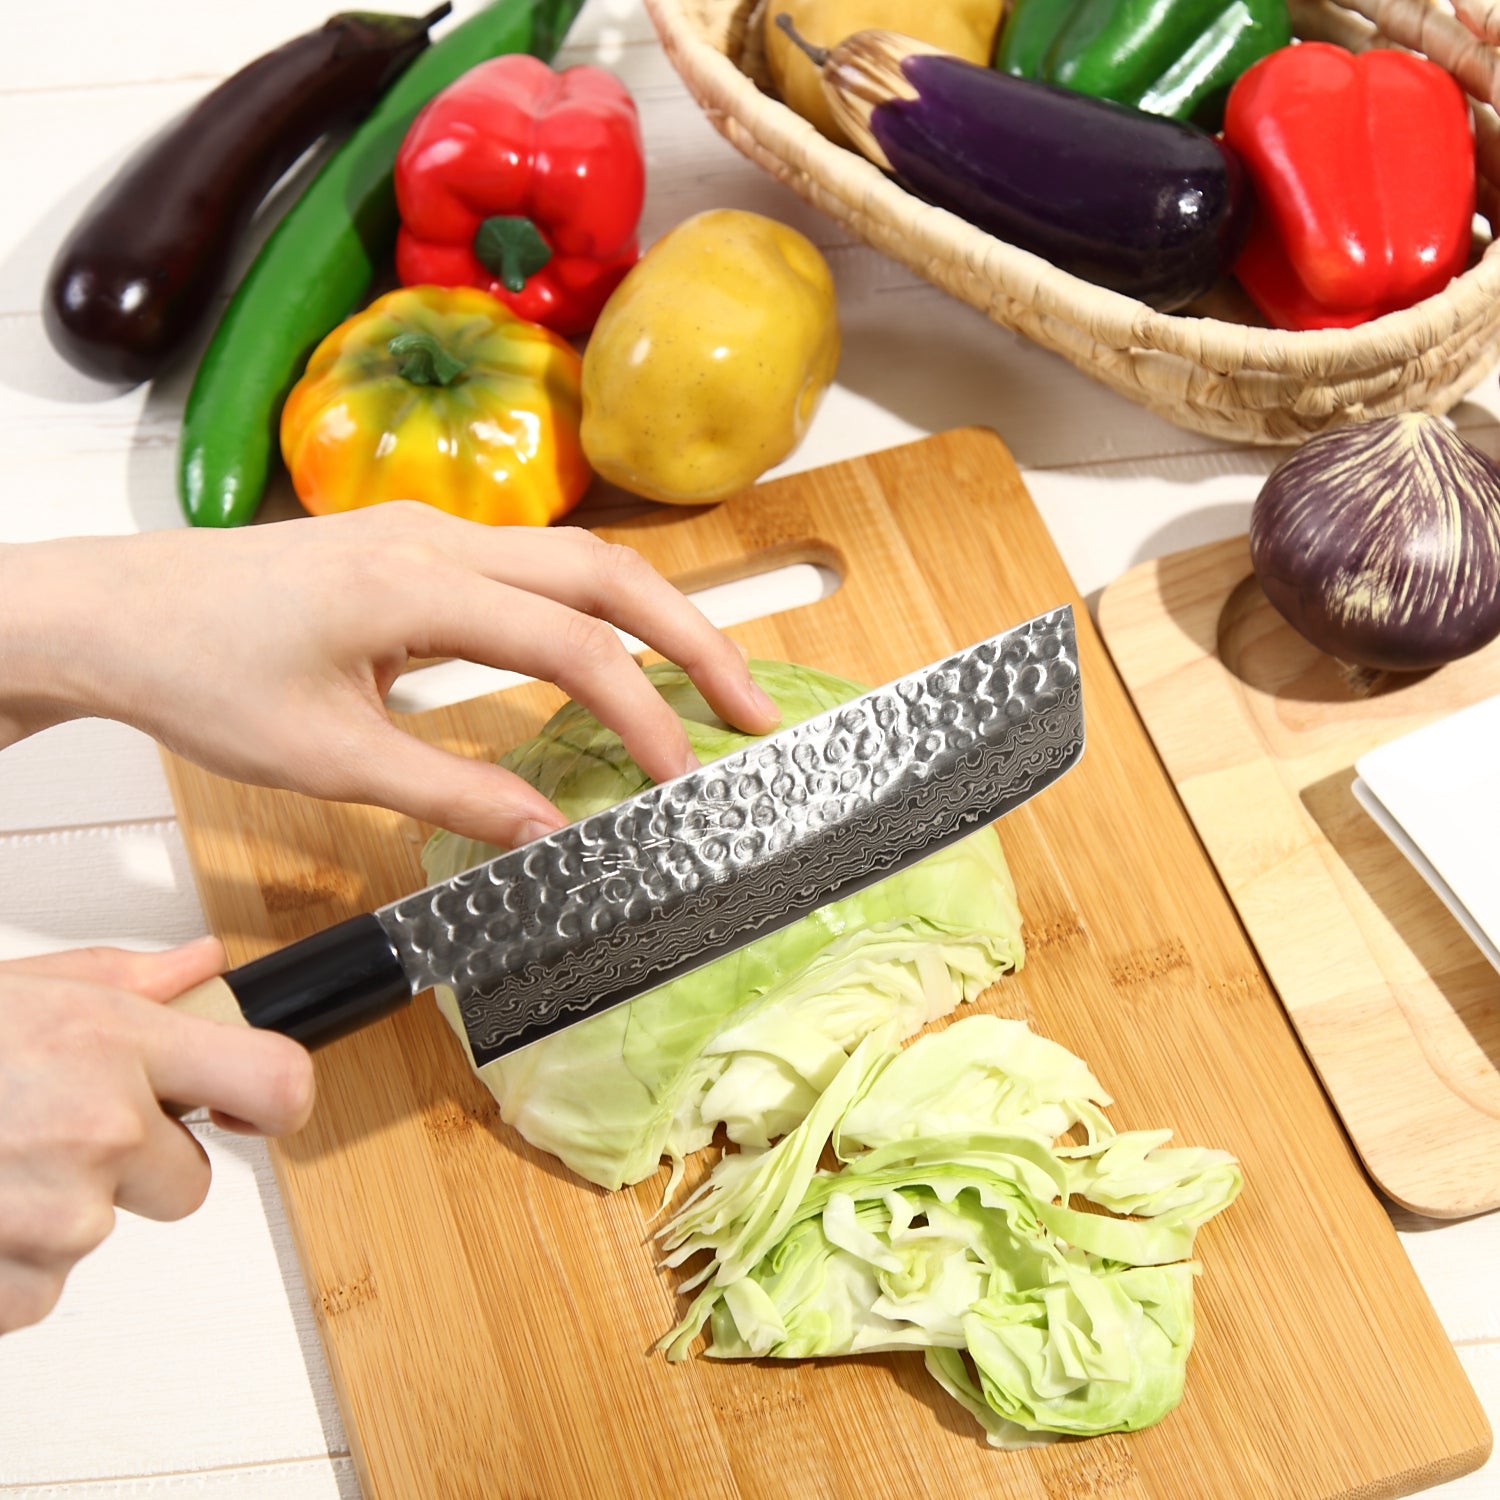 Syosaku Japanese Vegetable Knife Hammered Damascus VG-10 46 Layer D-Shape Magnolia Wood Handle, Nakiri 6.3-inch (160mm)